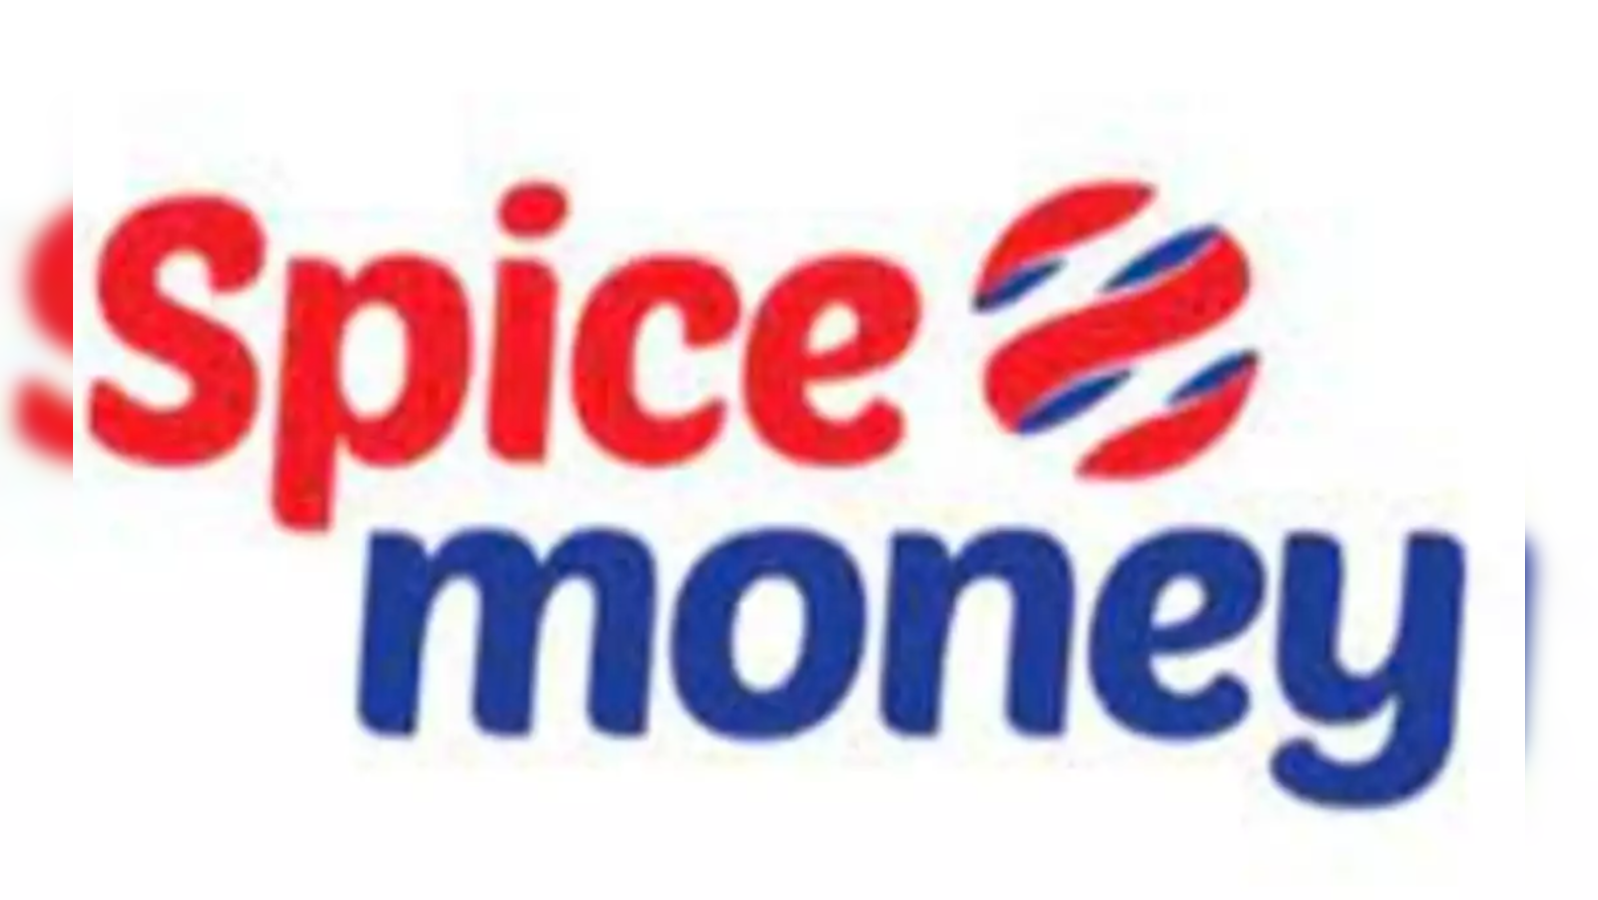 Spice money new update | Spice money ने किया फ्रॉड 😭 npci new update |  aeps new update | csp update - YouTube